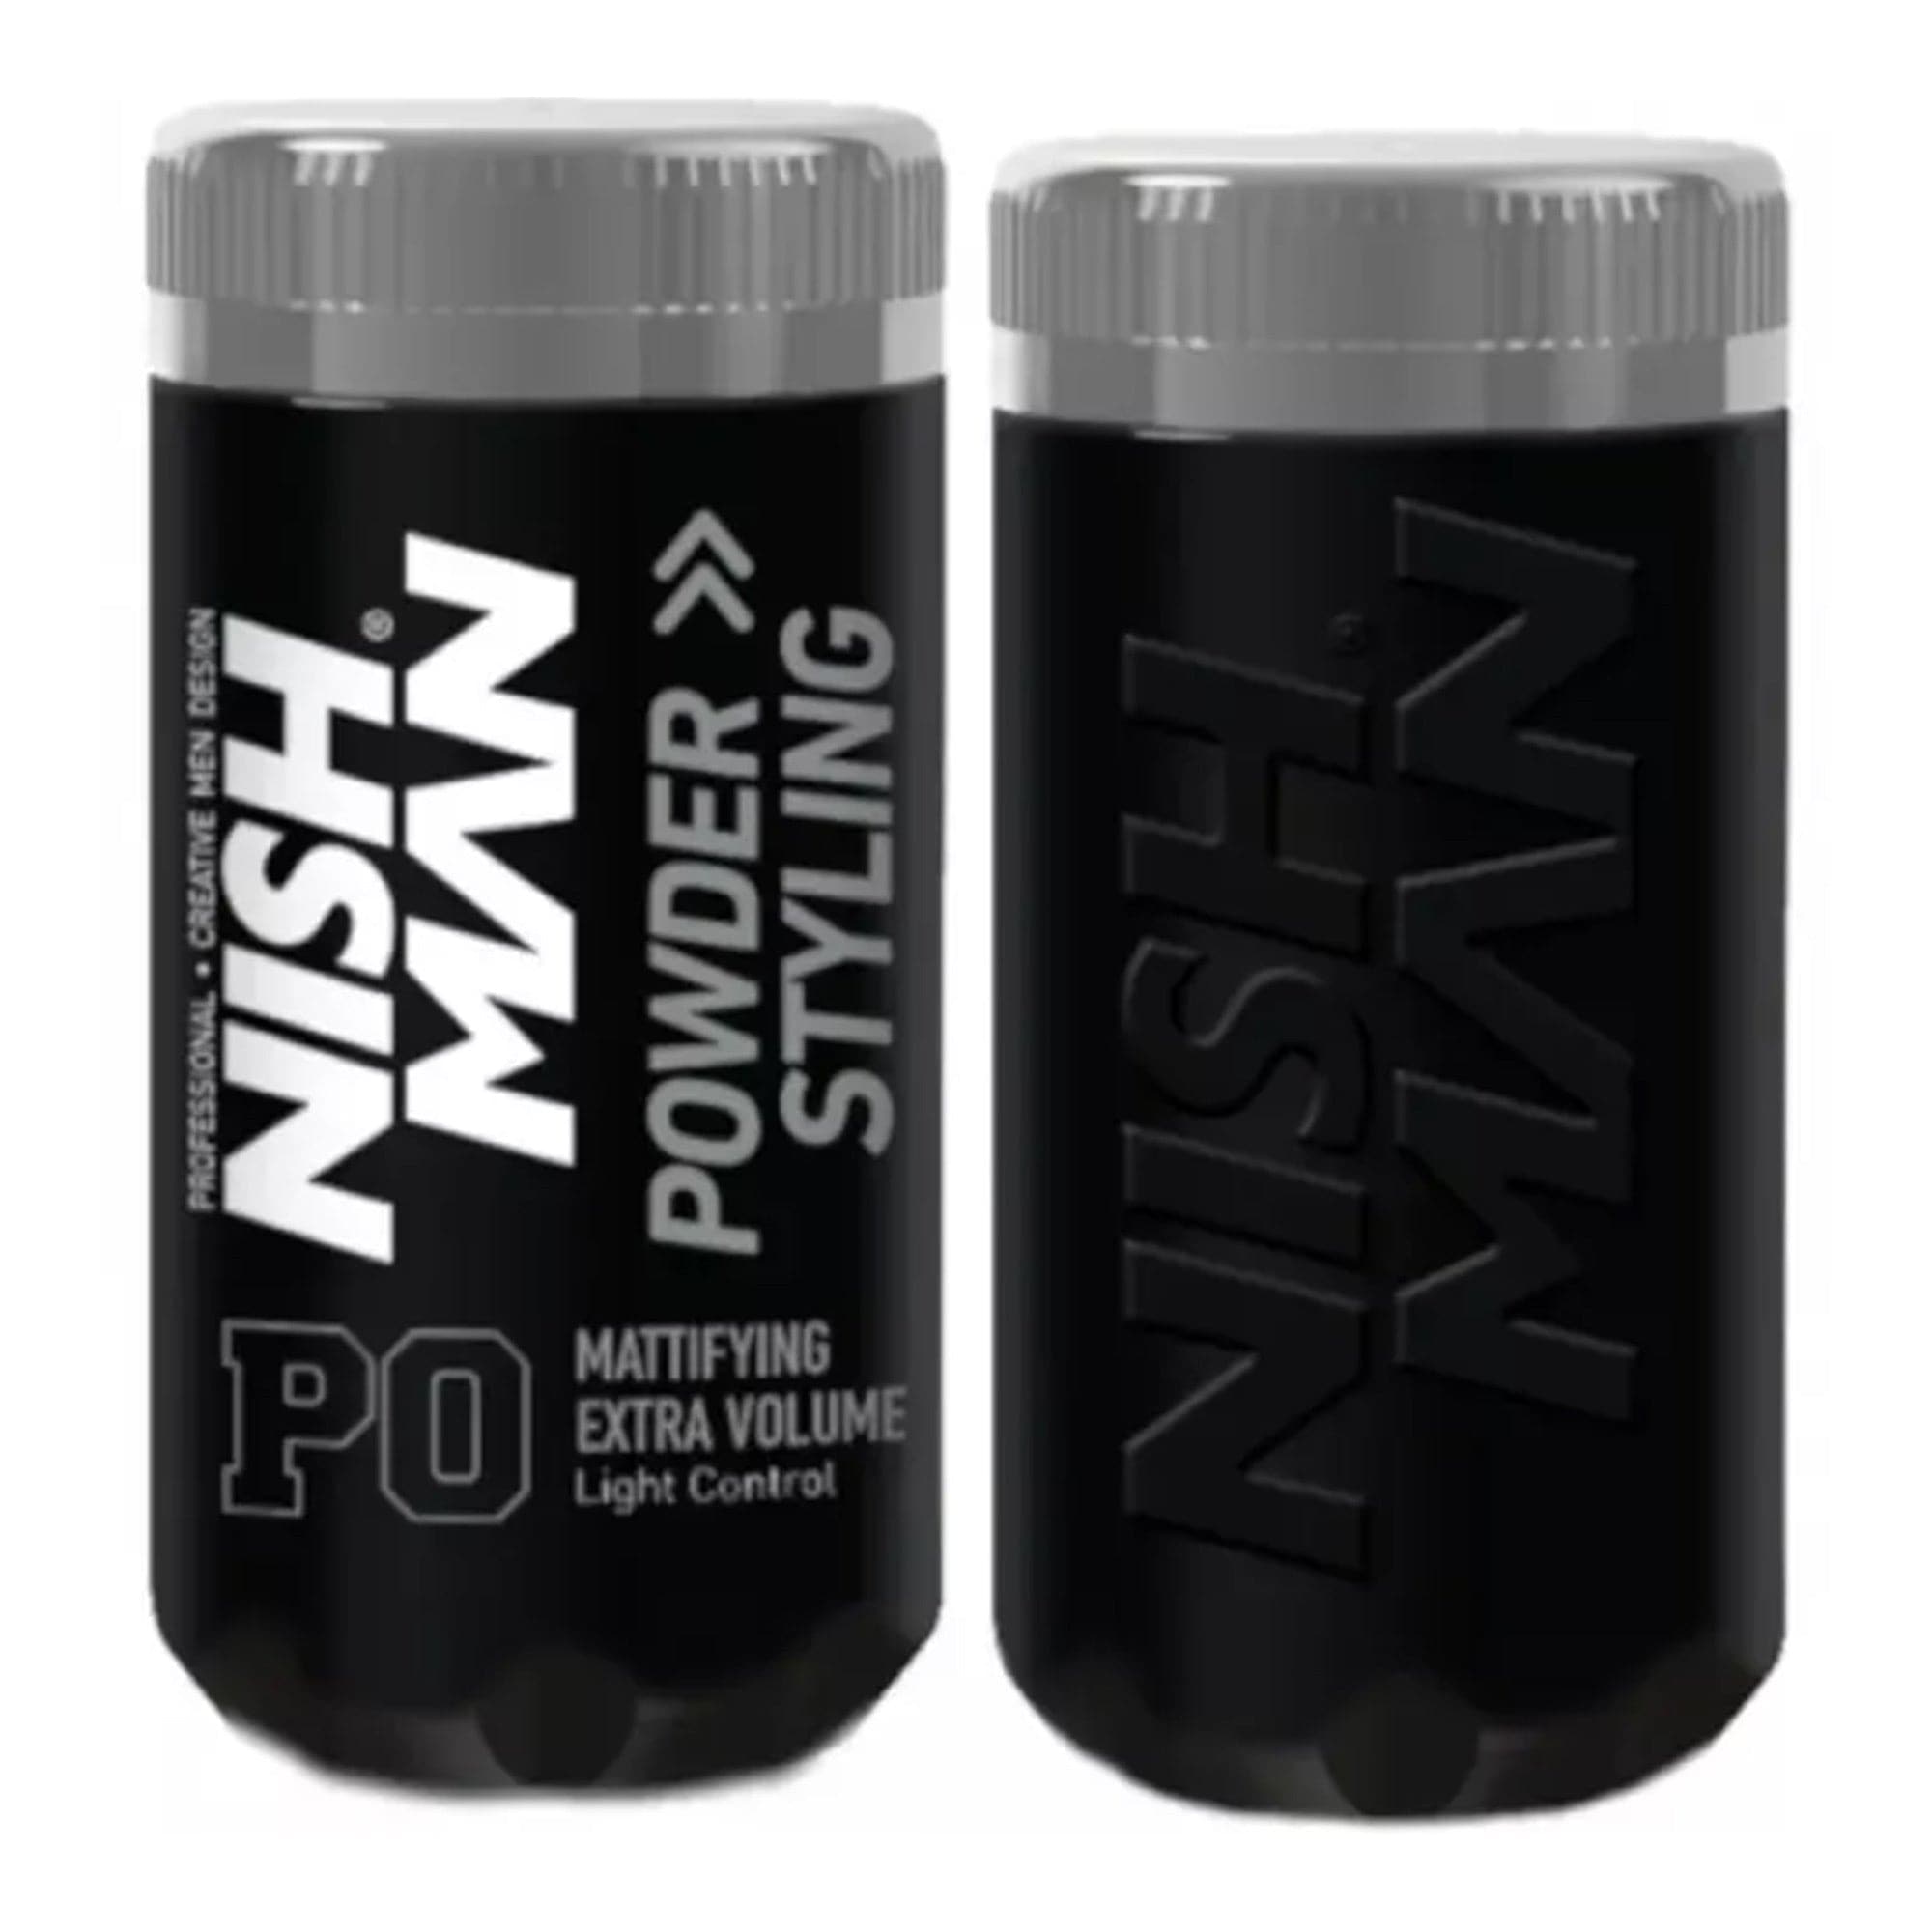 Nishman - Hair Styling Powder Wax P0 Mattifying Extra Volume Light Control 20g